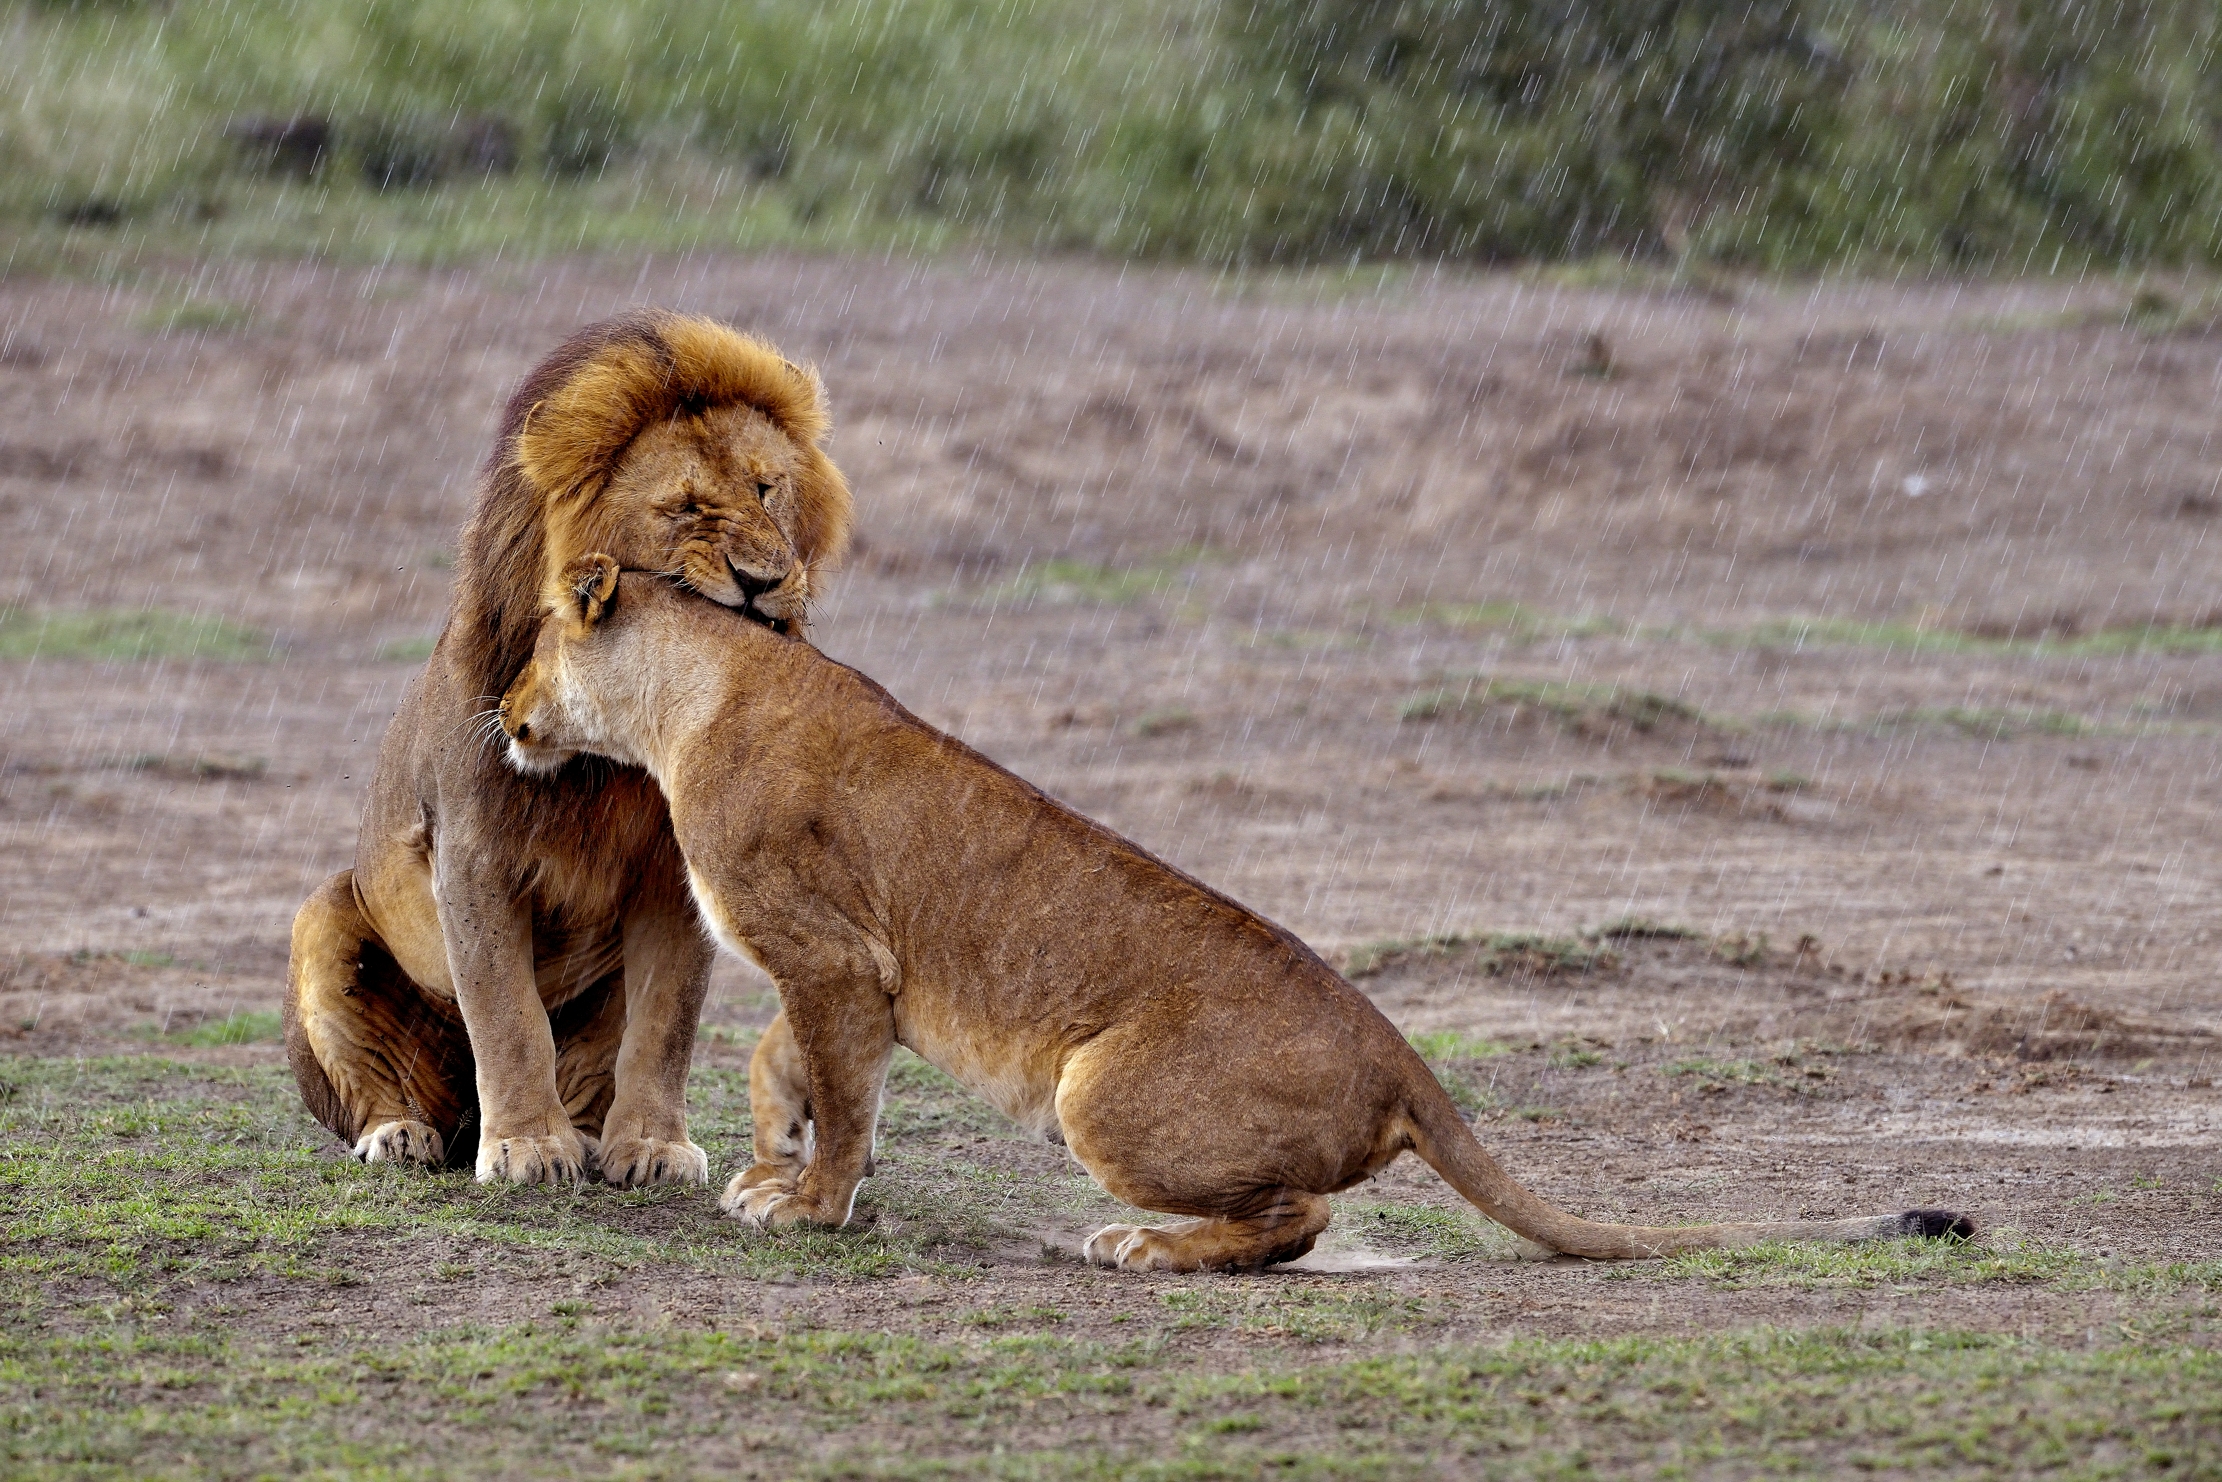 Ngorongoro Cocervation Area - Lions...